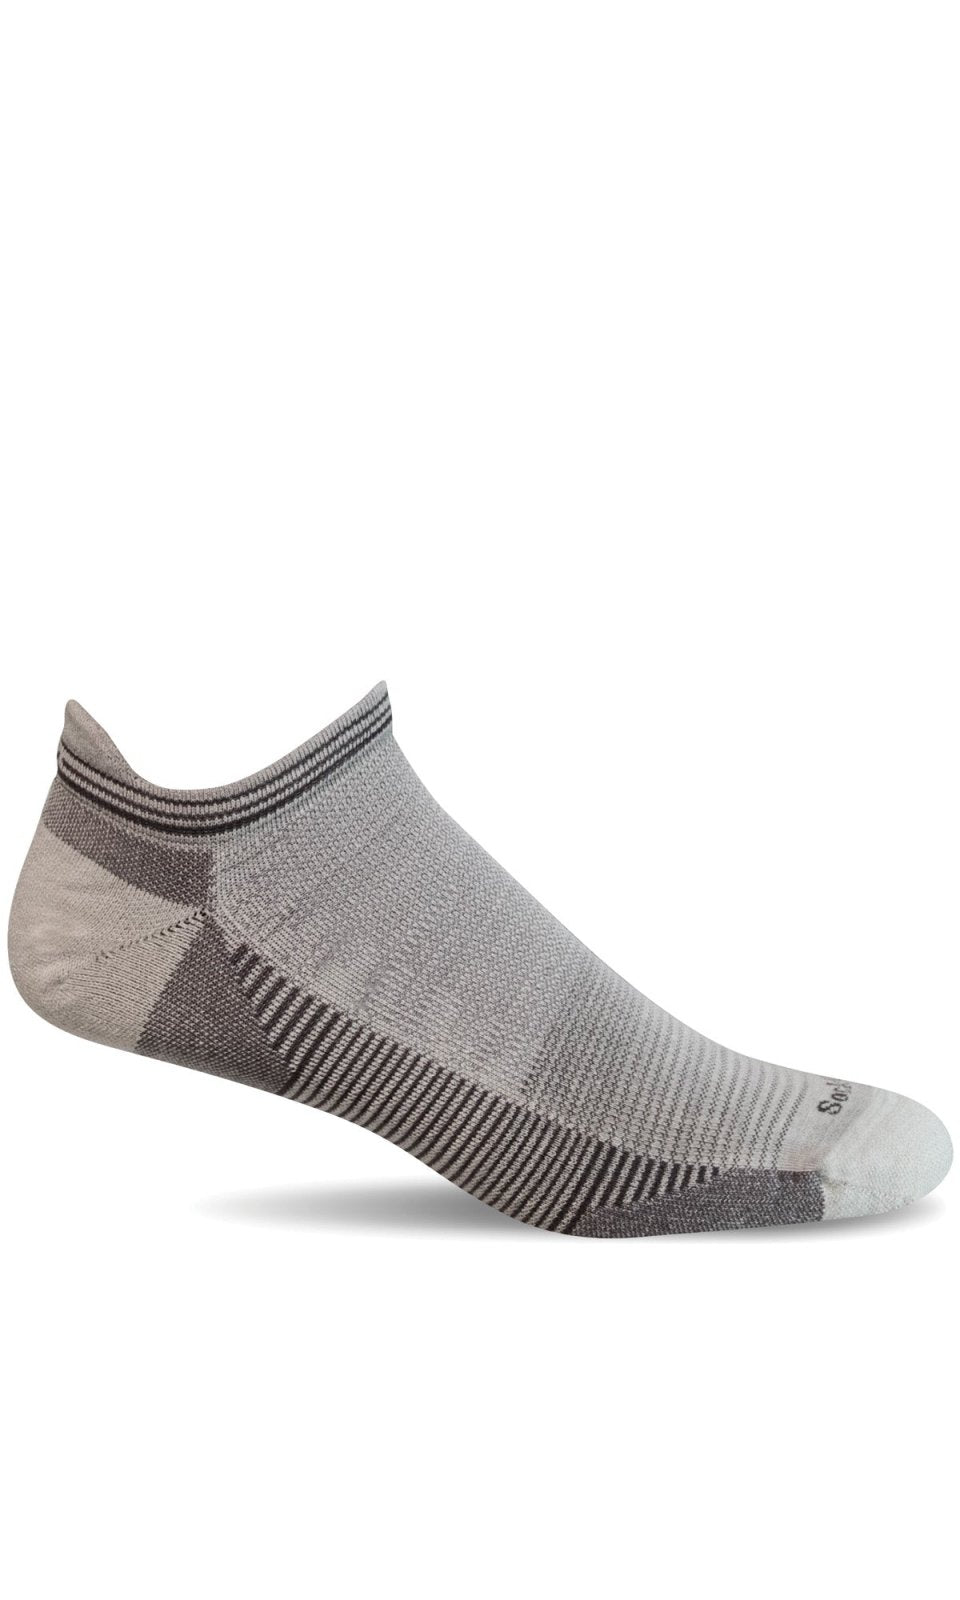 Men's Cadence Micro | Moderate Compression Socks - Merino Wool Sport Compression - Sockwell